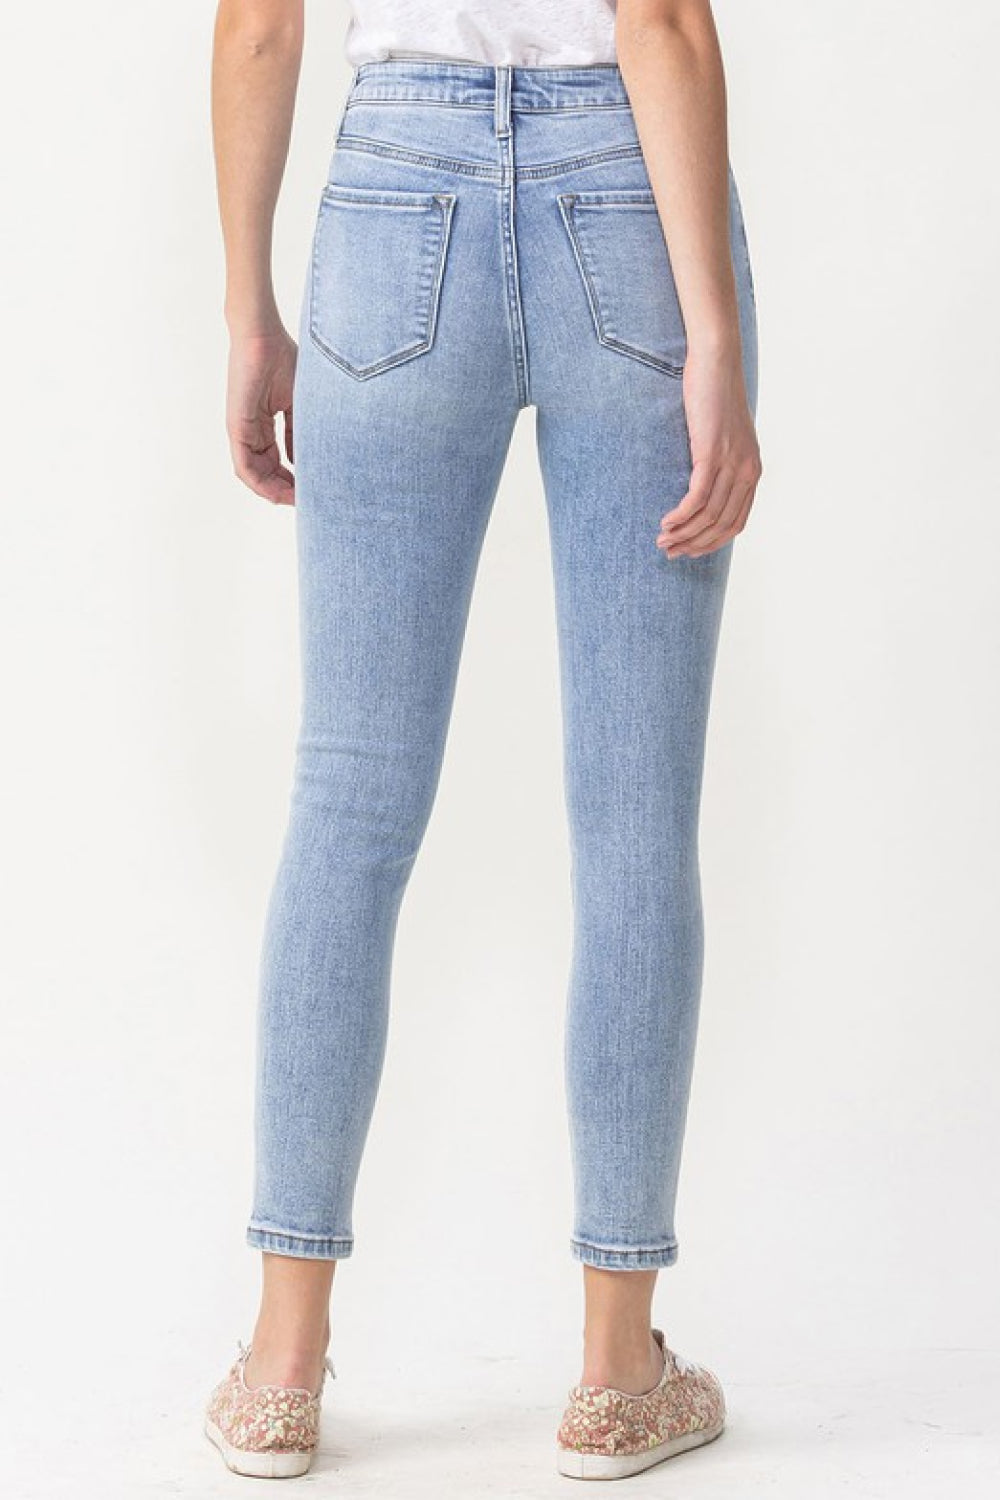 Lovervet Talia High Rise Crop Skinny Jeans - Online Only